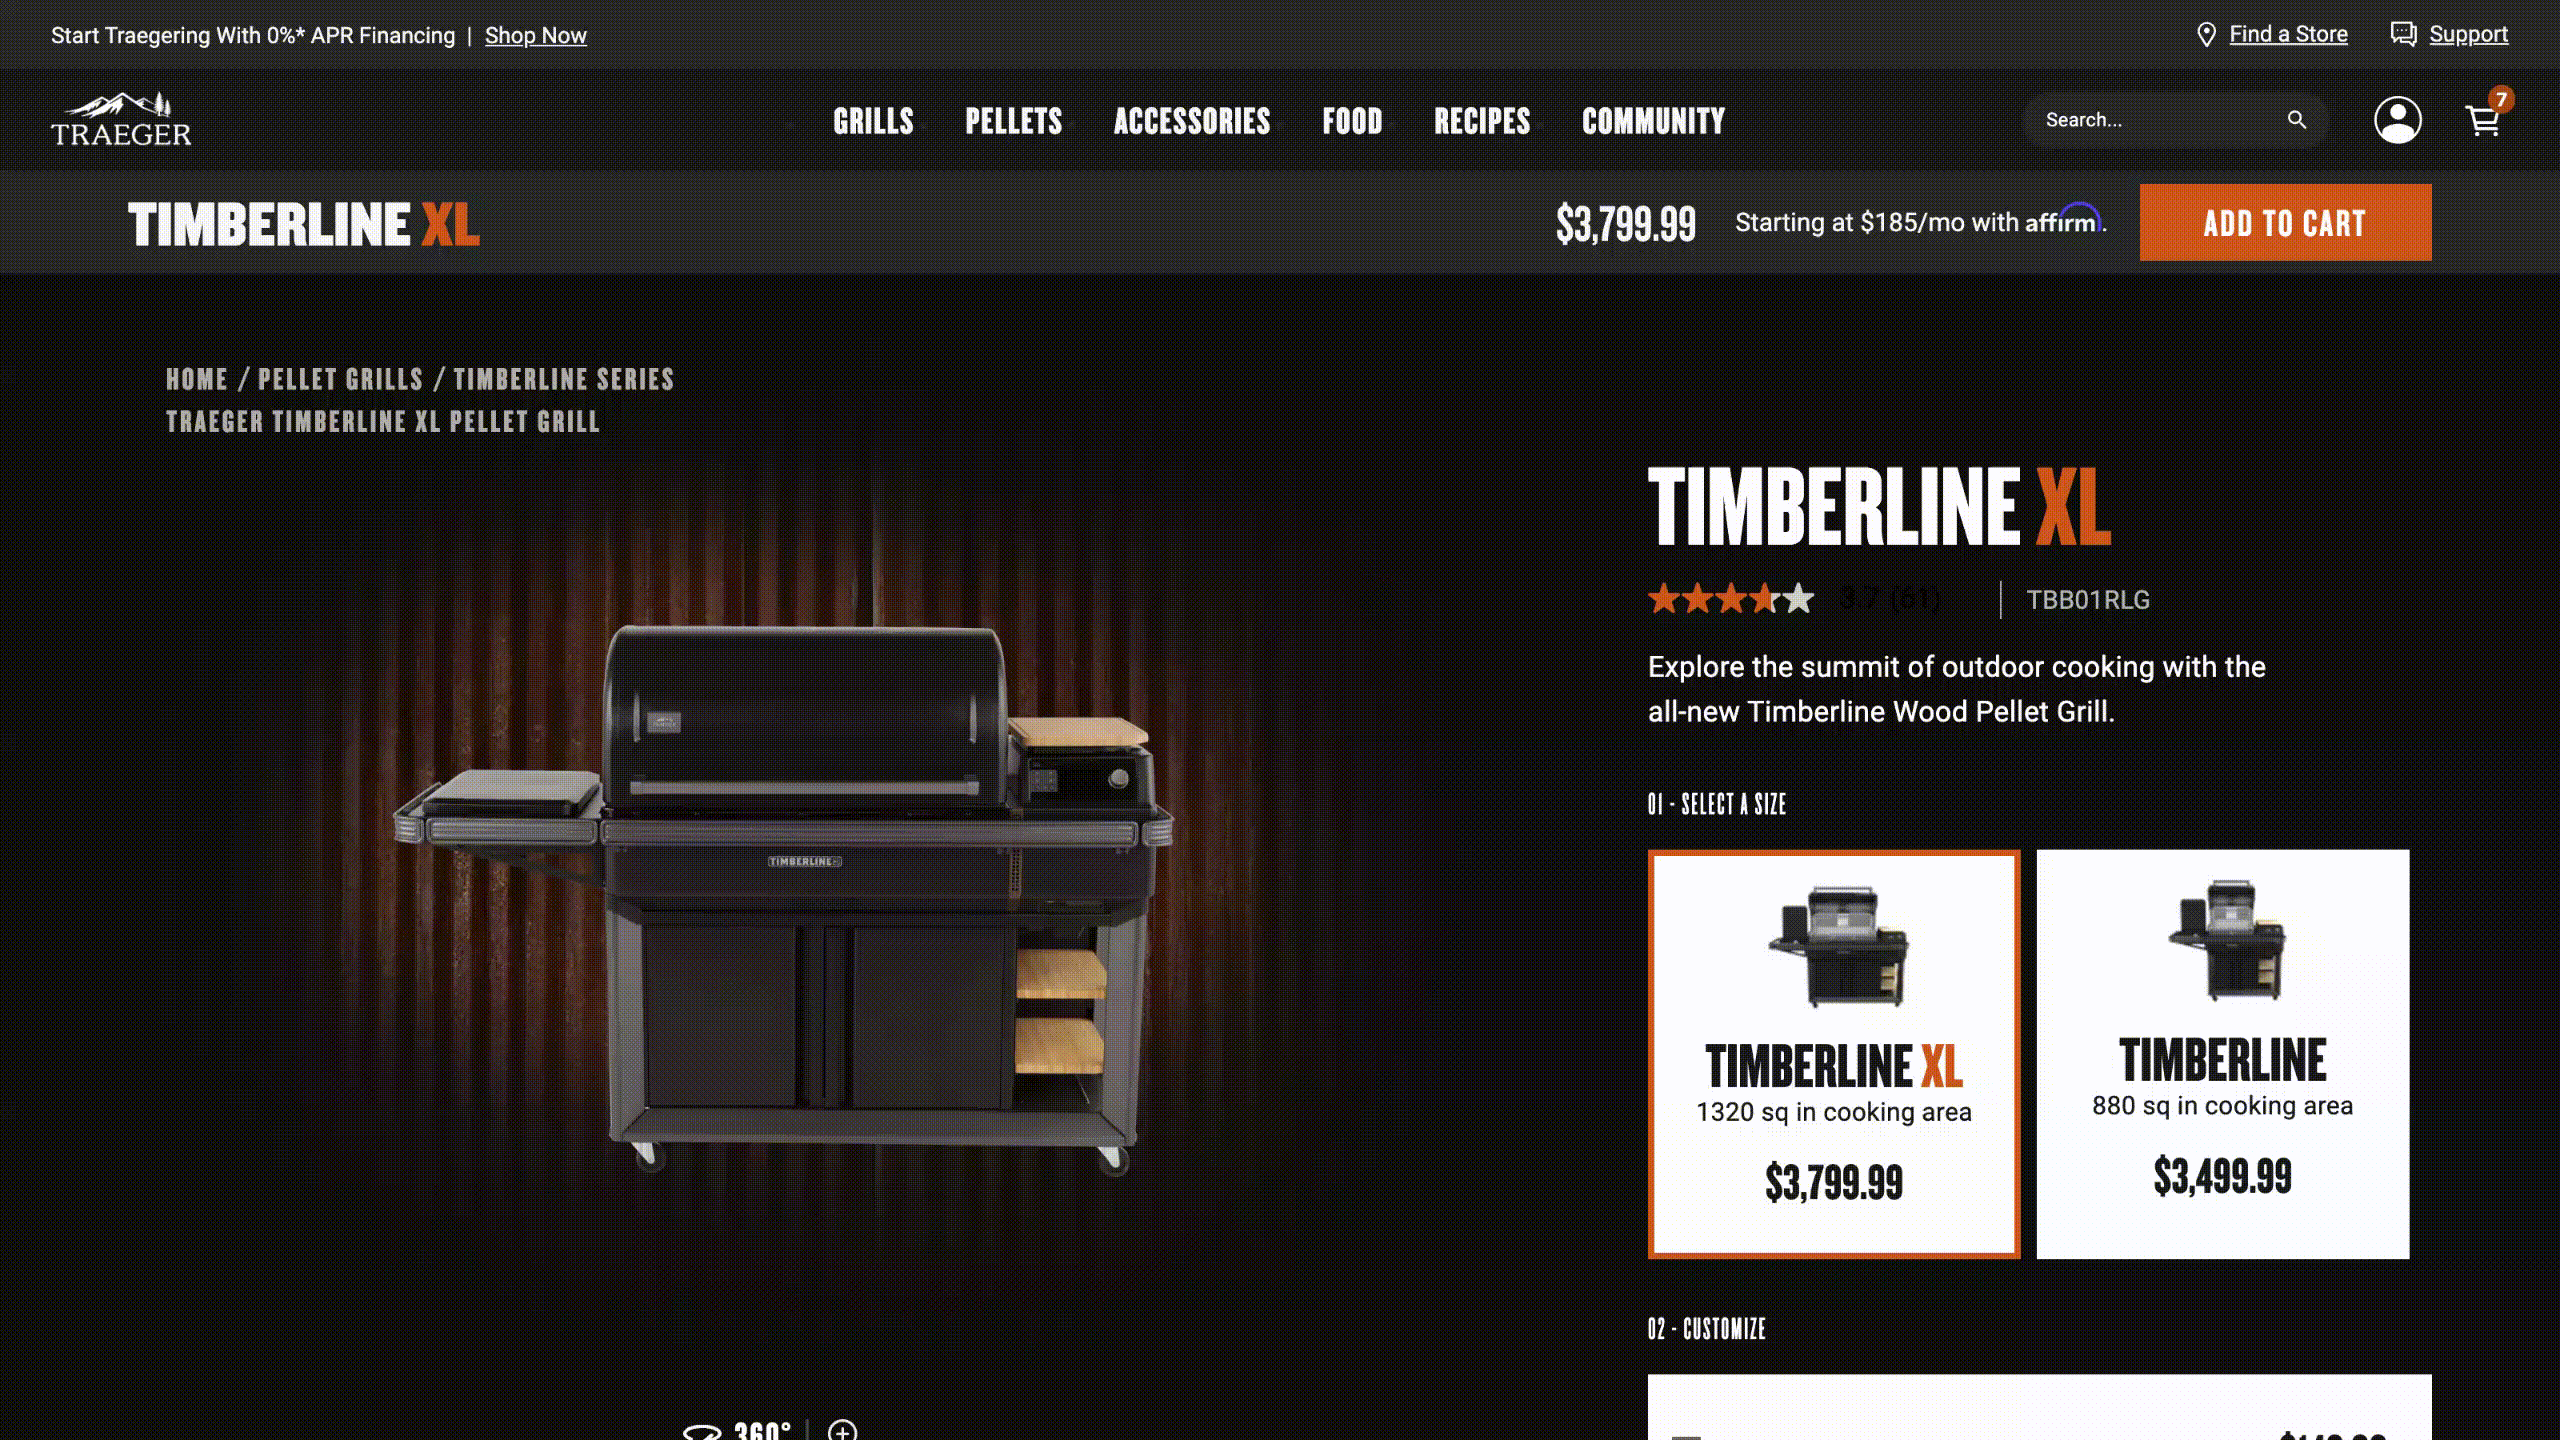 Timberline XL customizer experience